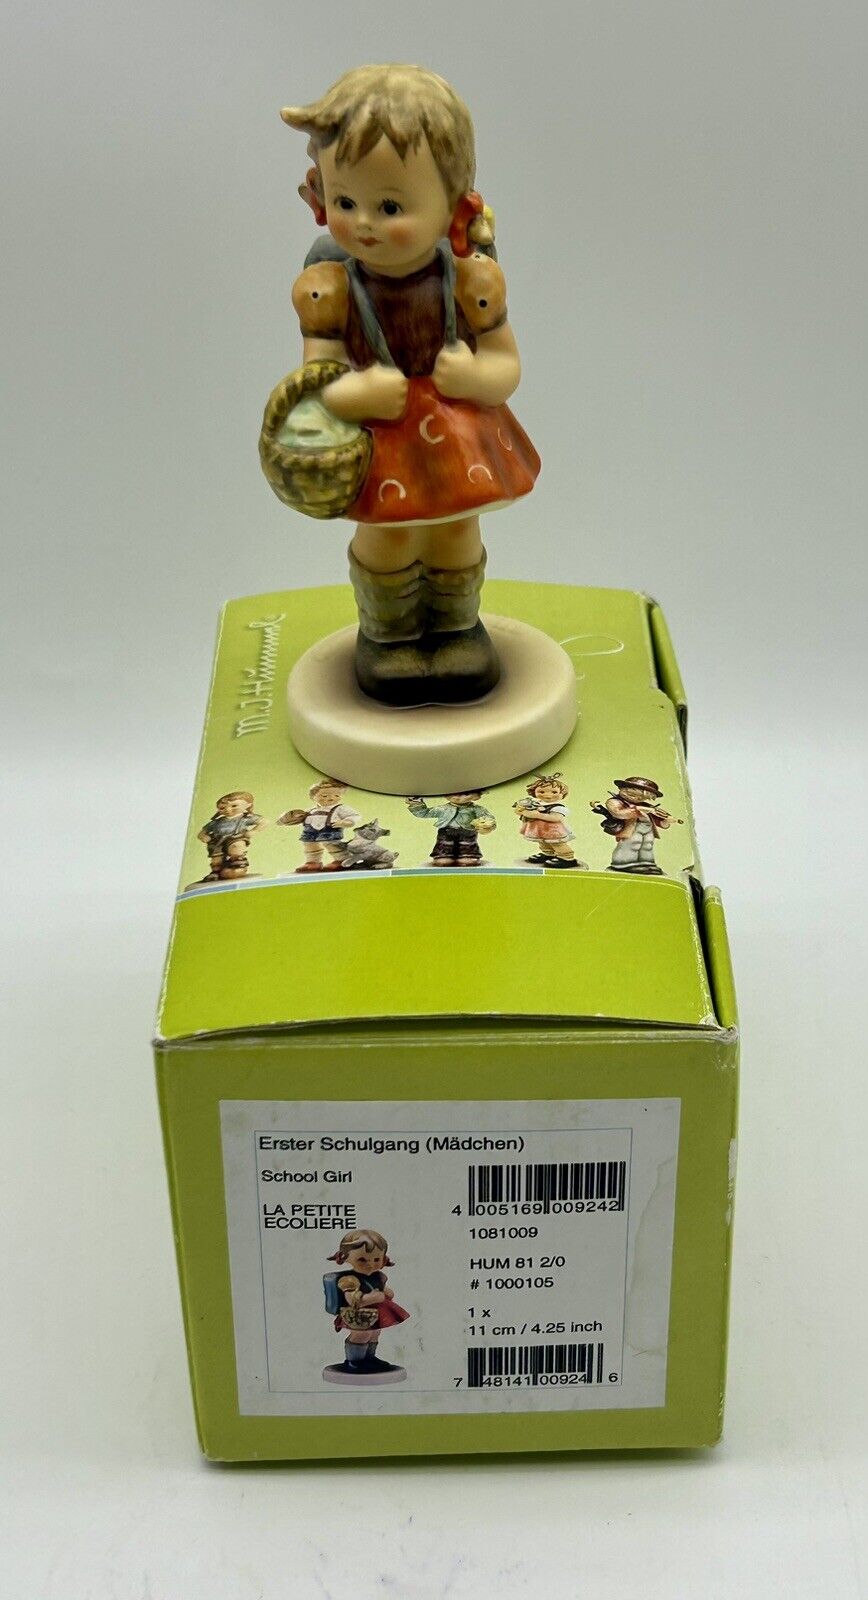 Hummel School Girl Figurine 81 2/0 New With Box Germany